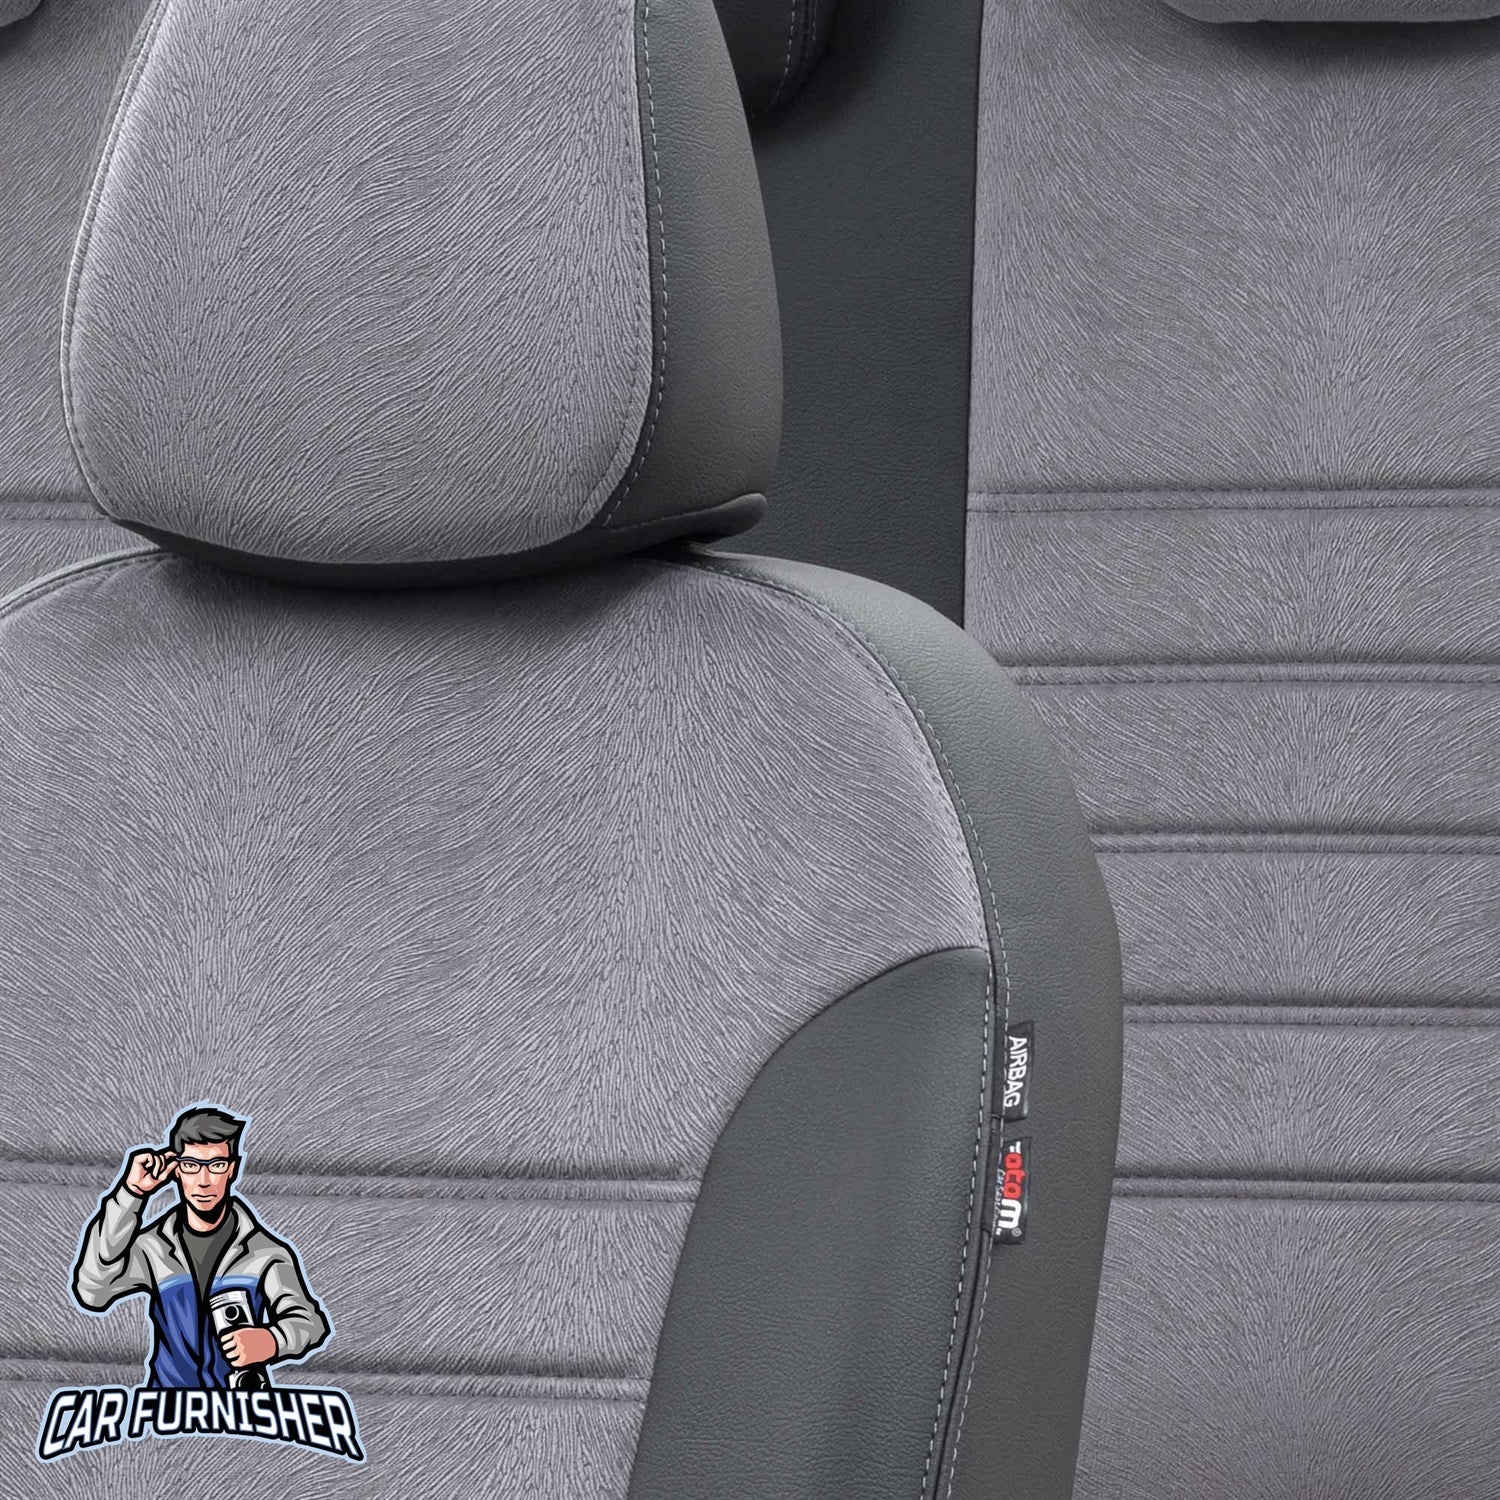 Audi A1 Car Seat Cover 2011-2016 Custom Made London Design Smoked Black Full Set (5 Seats + Handrest) Leather & Fabric